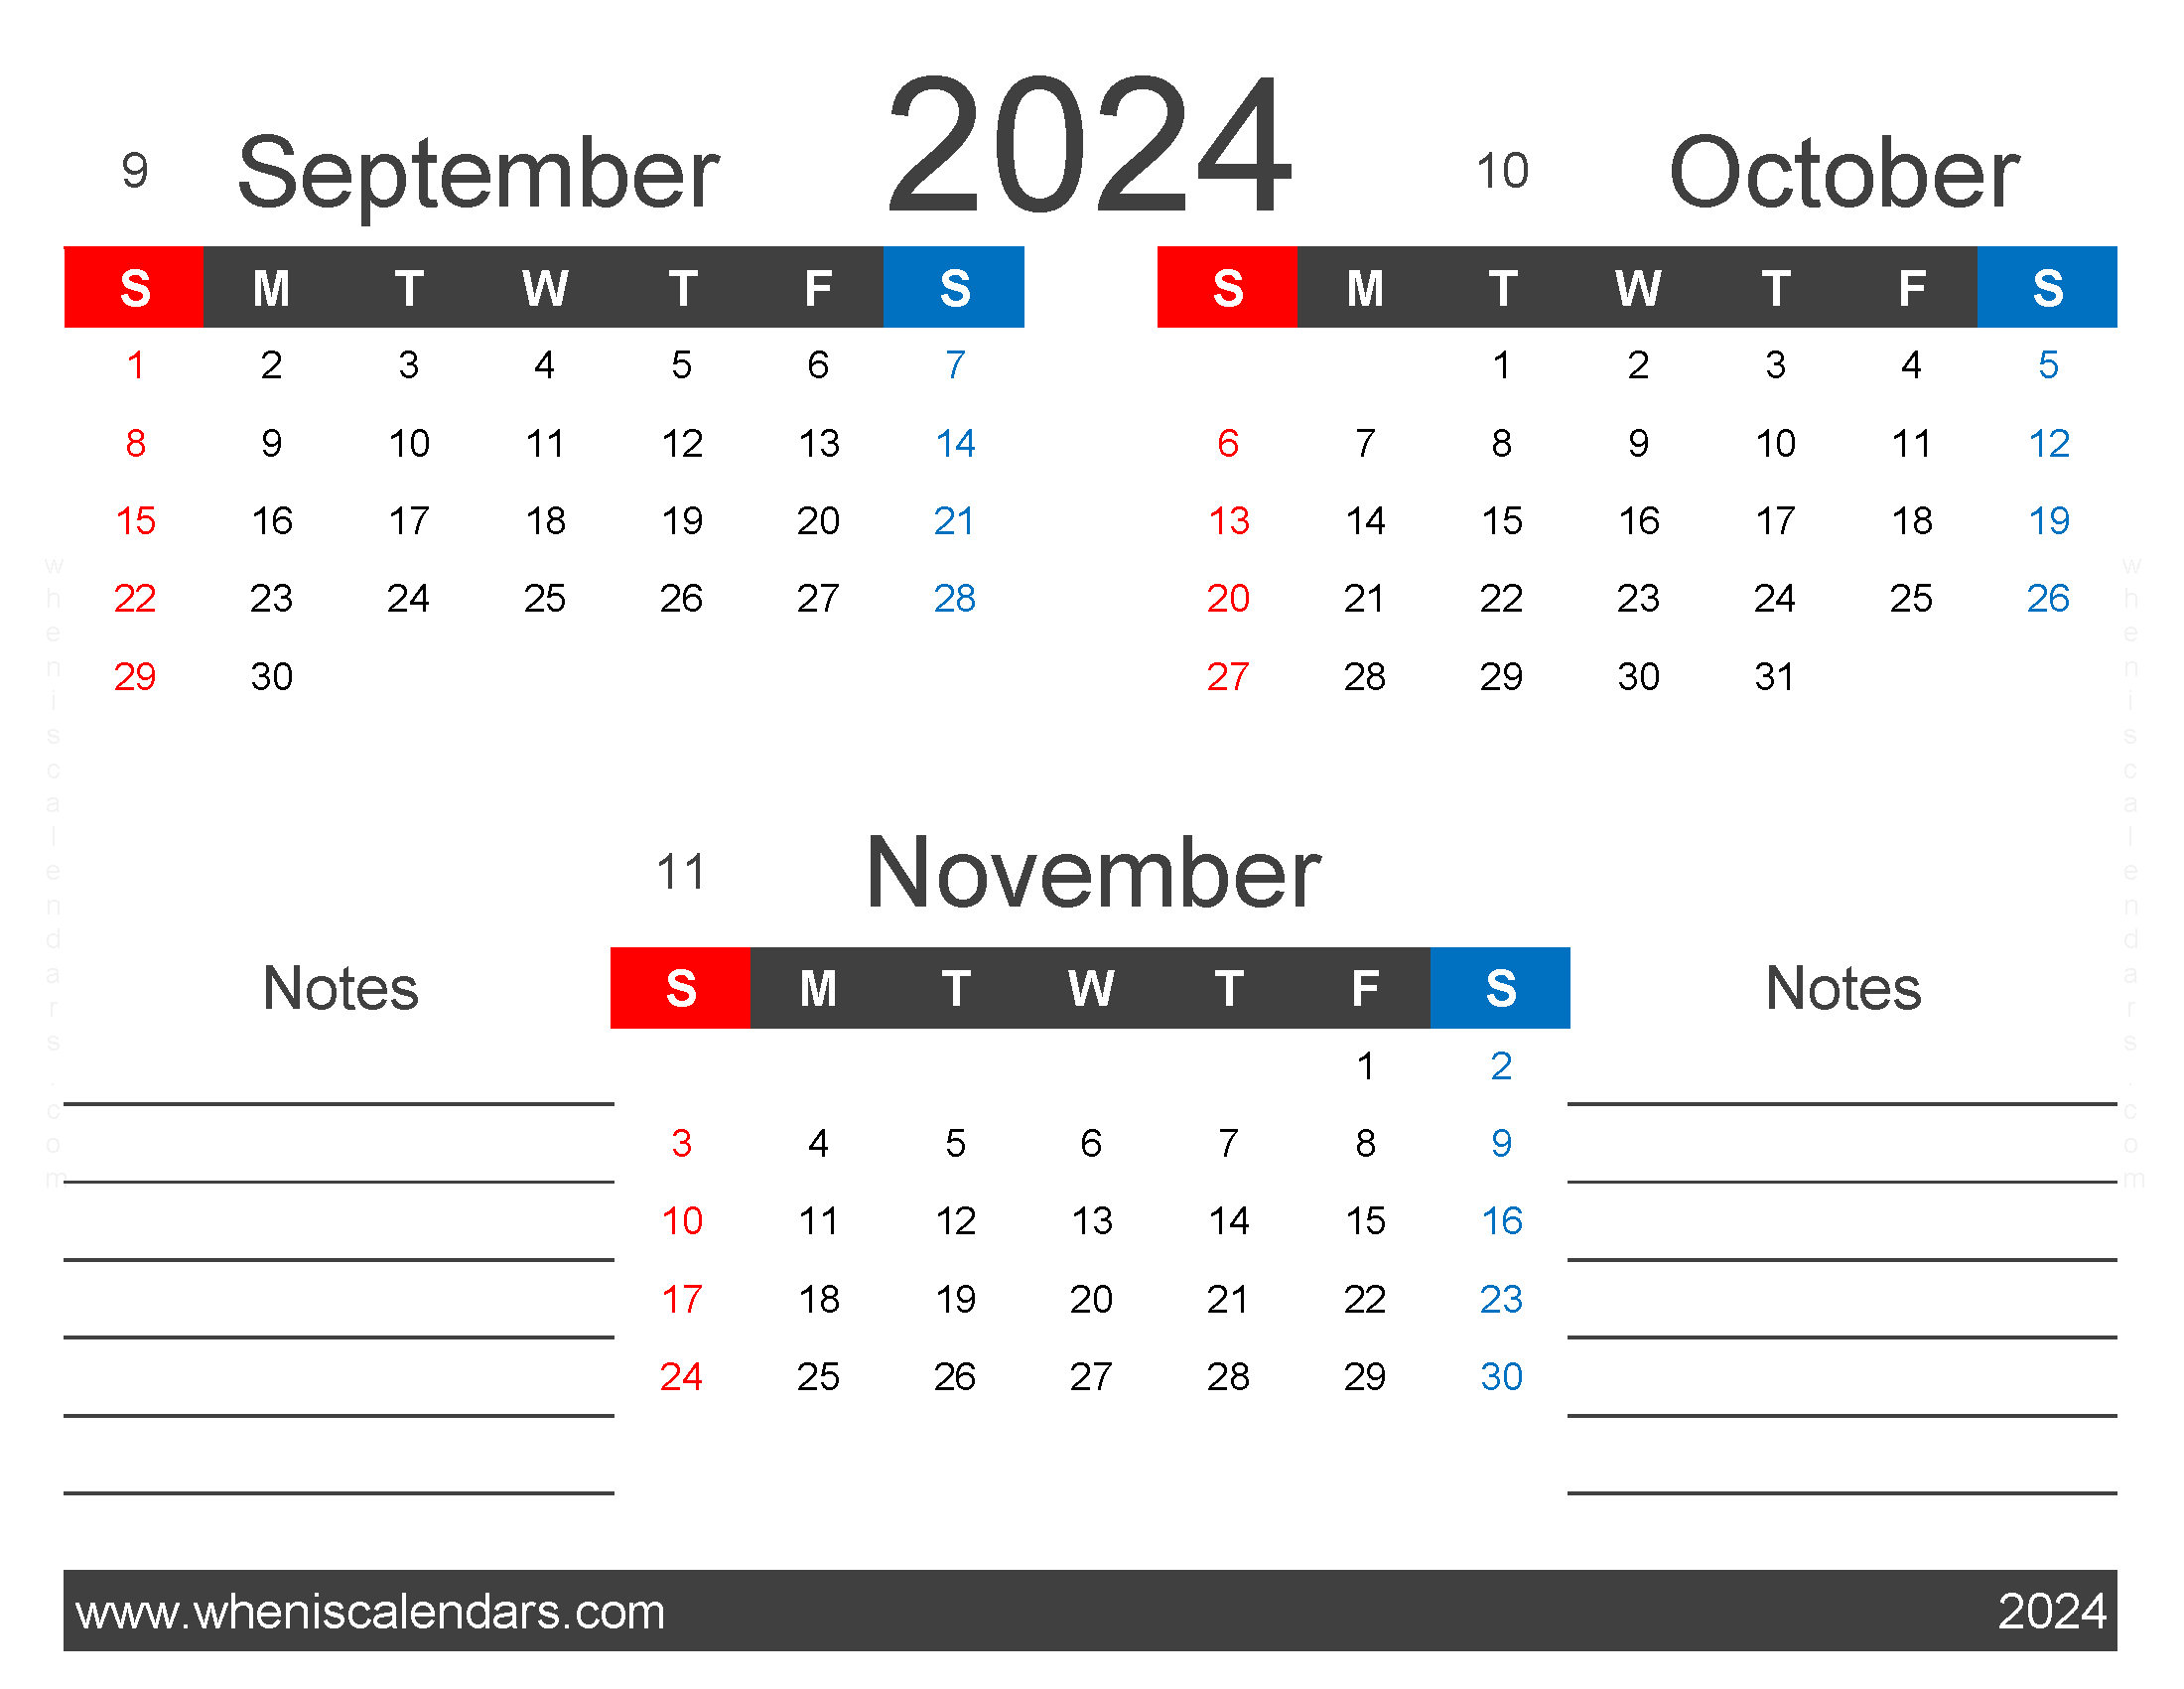 Download Calendar 2024 Sept Oct Nov SON423